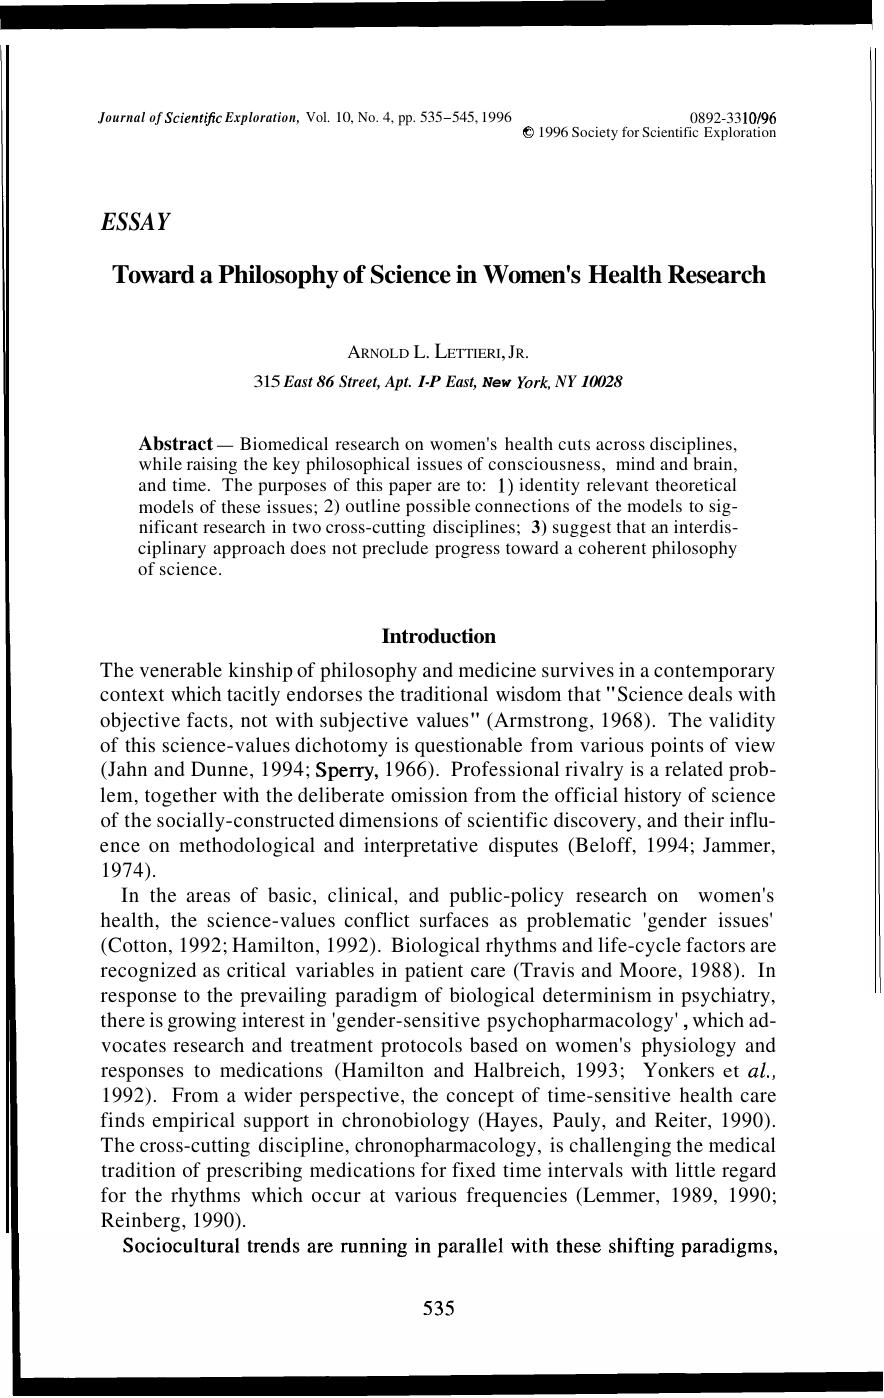 Toward a Philosophy of Science in Women's Health Research - Essay